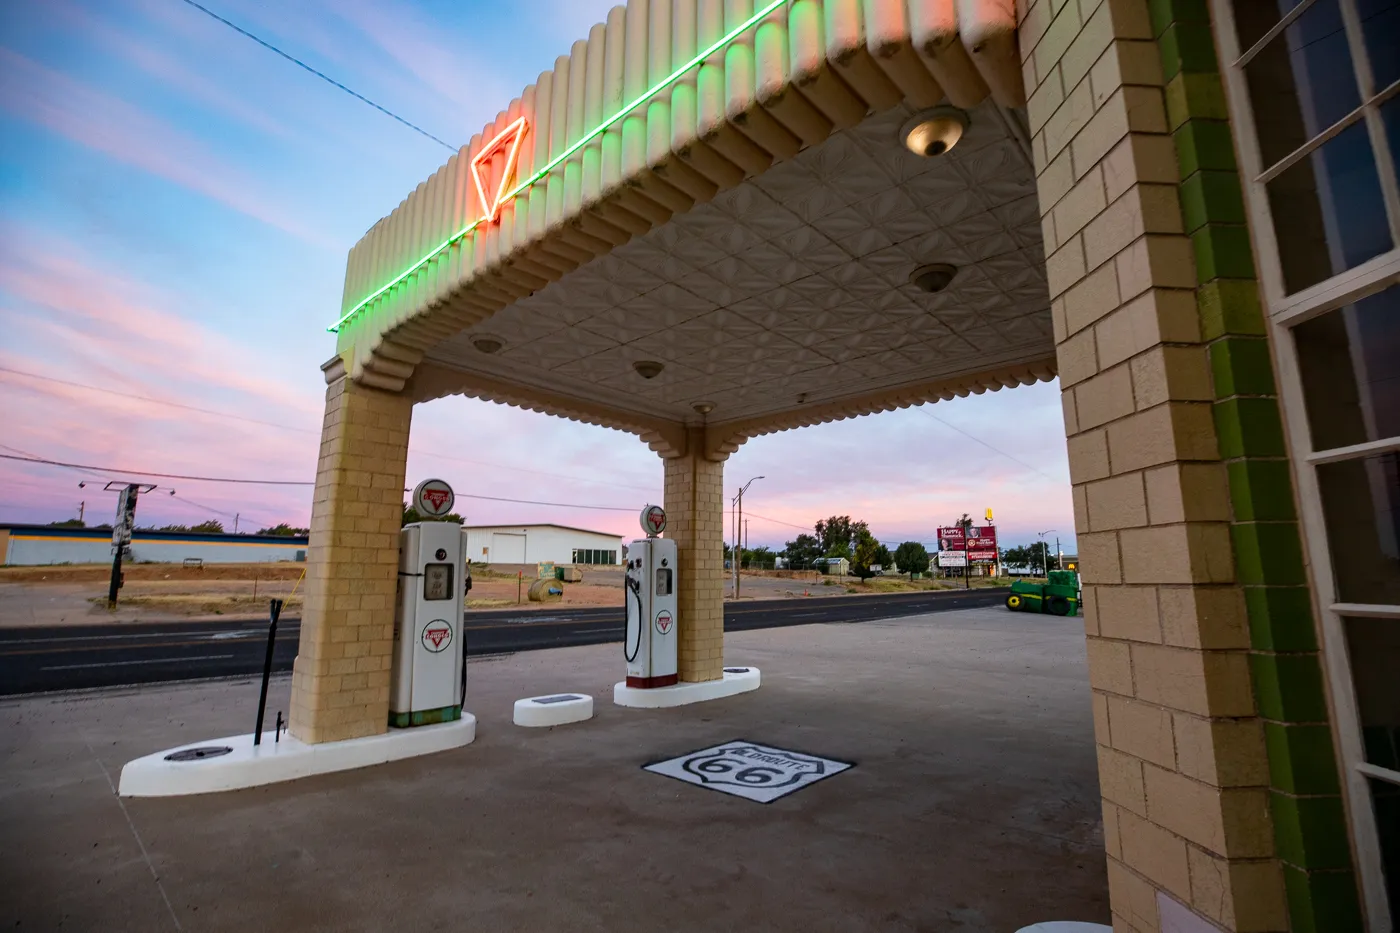 The Conoco Tower Station and U-Drop Inn Café in Shamrock, Texas